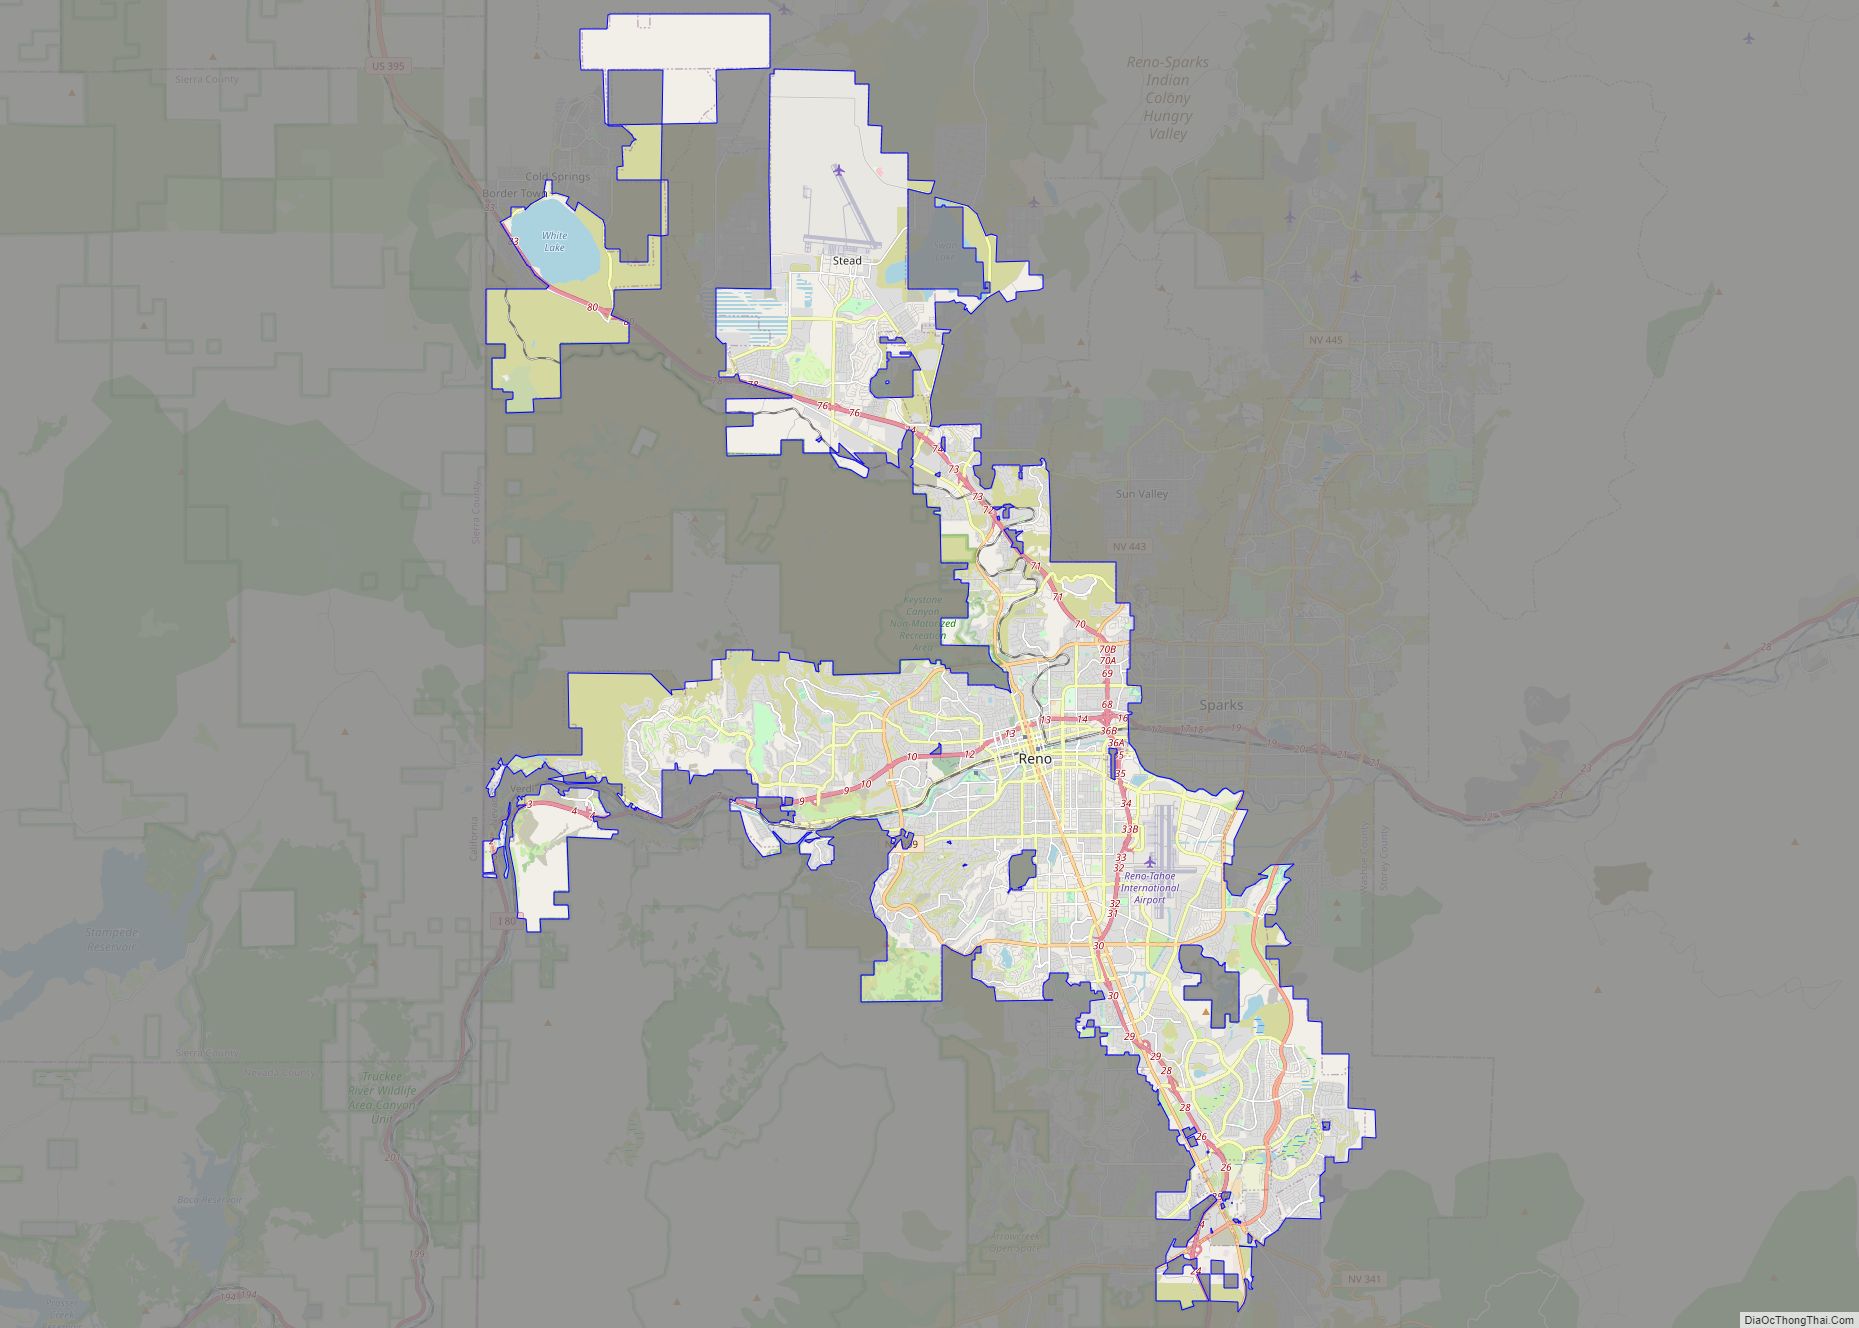 Map of Reno city